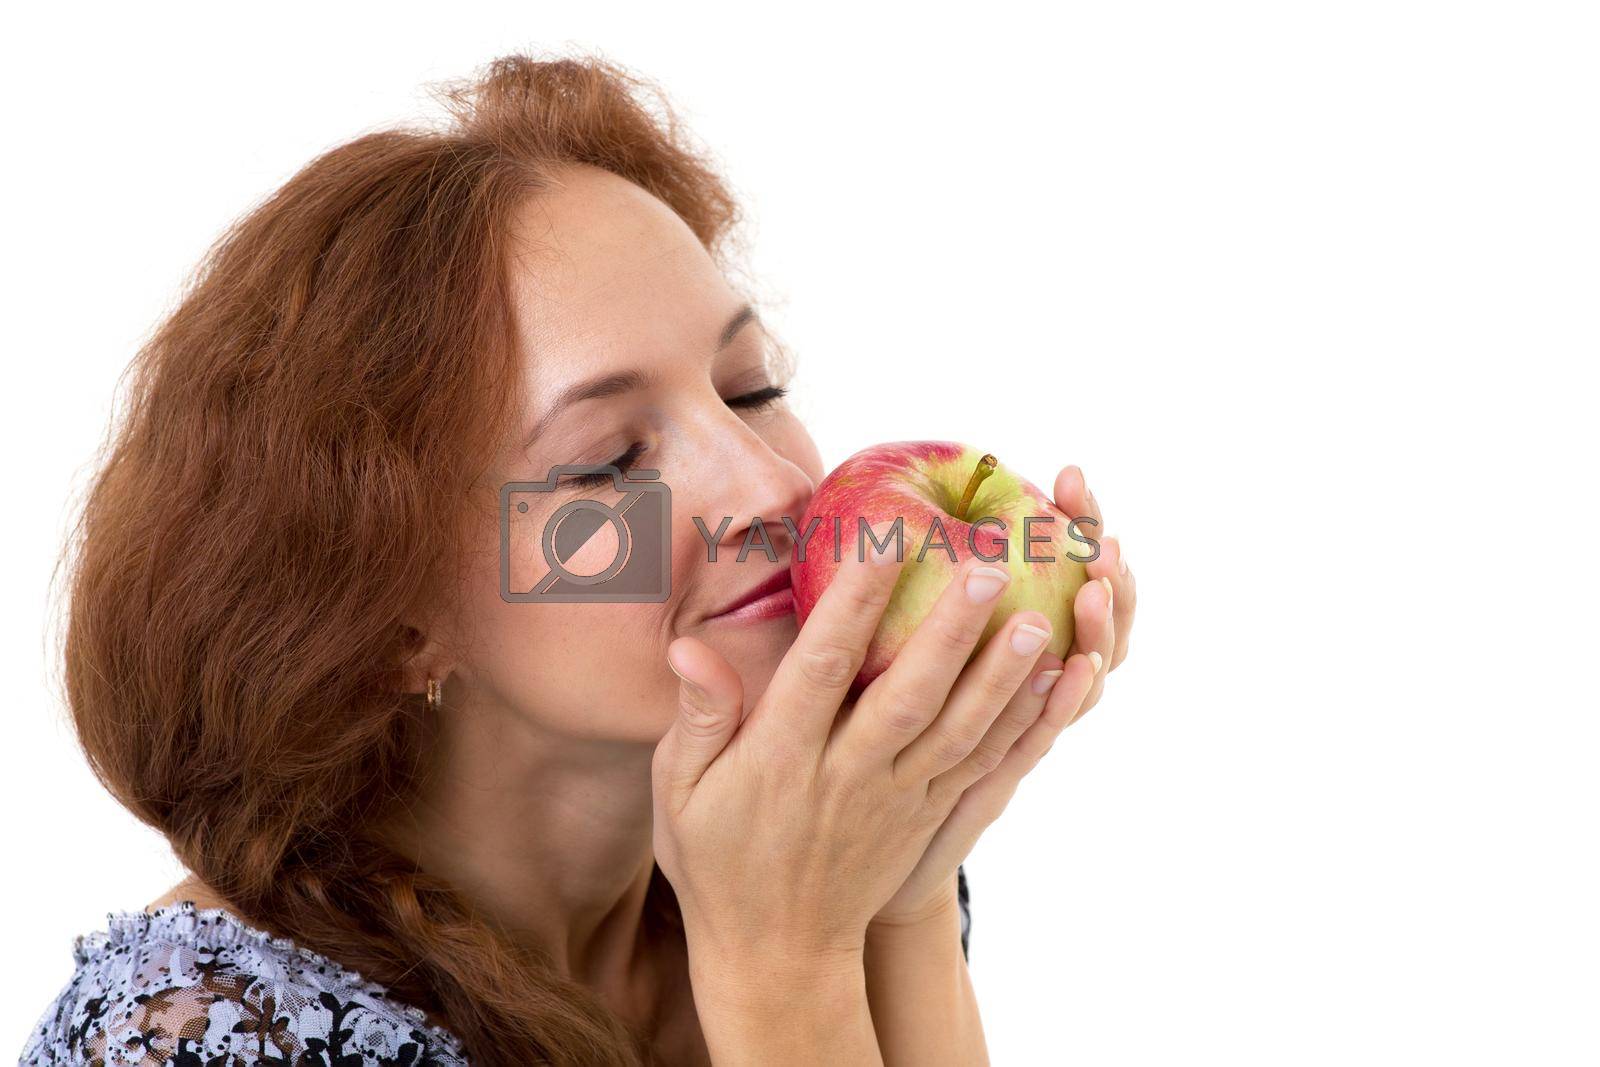 Royalty free image of Beautiful woman smelling fresh red apple by kolesnikov_studio